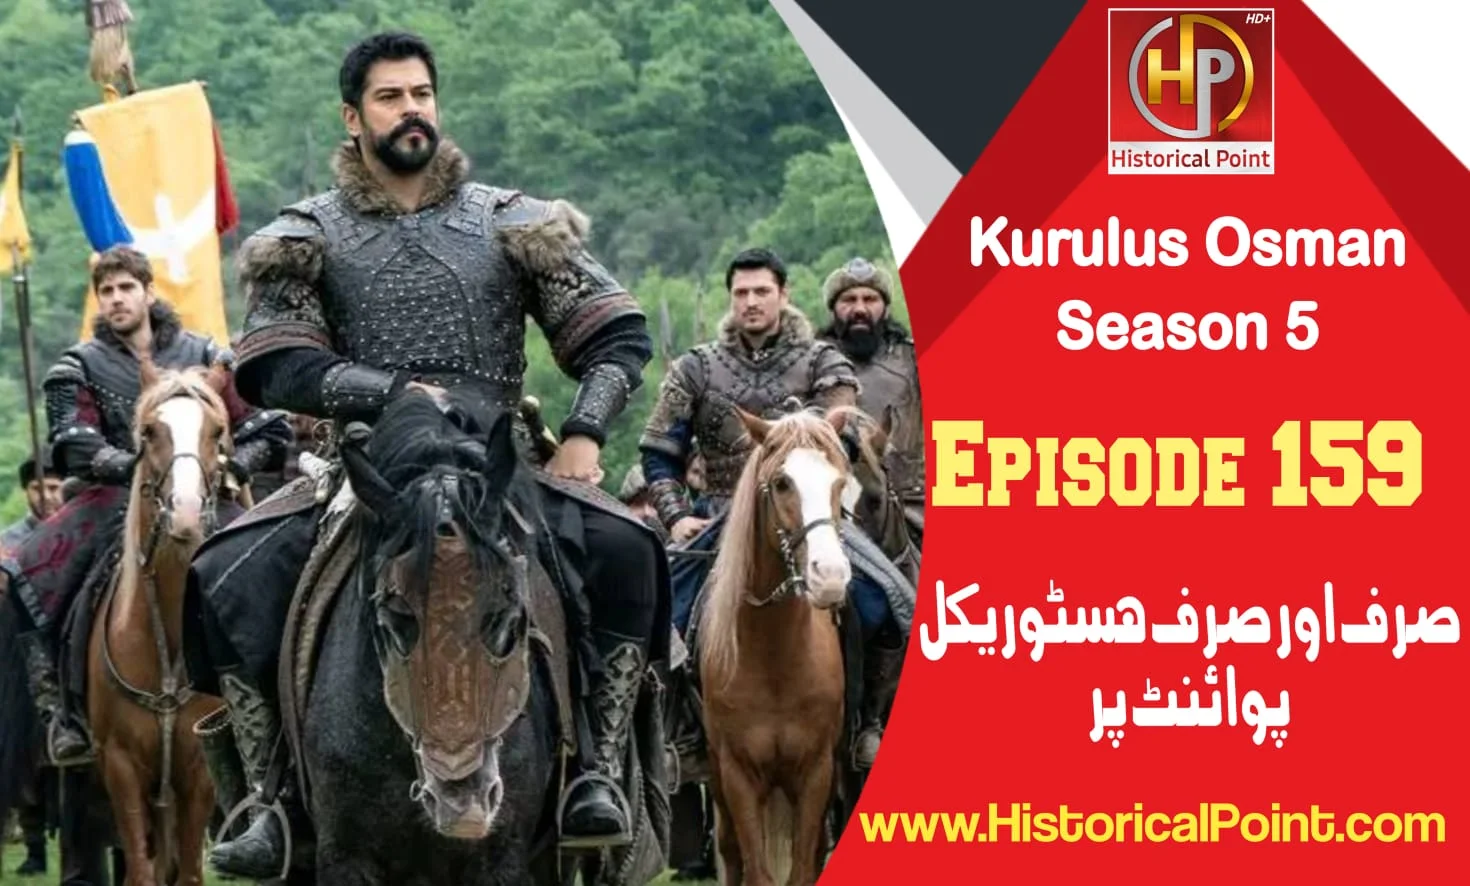 Kurulus Osman Episode 159 in Urdu Subtitles